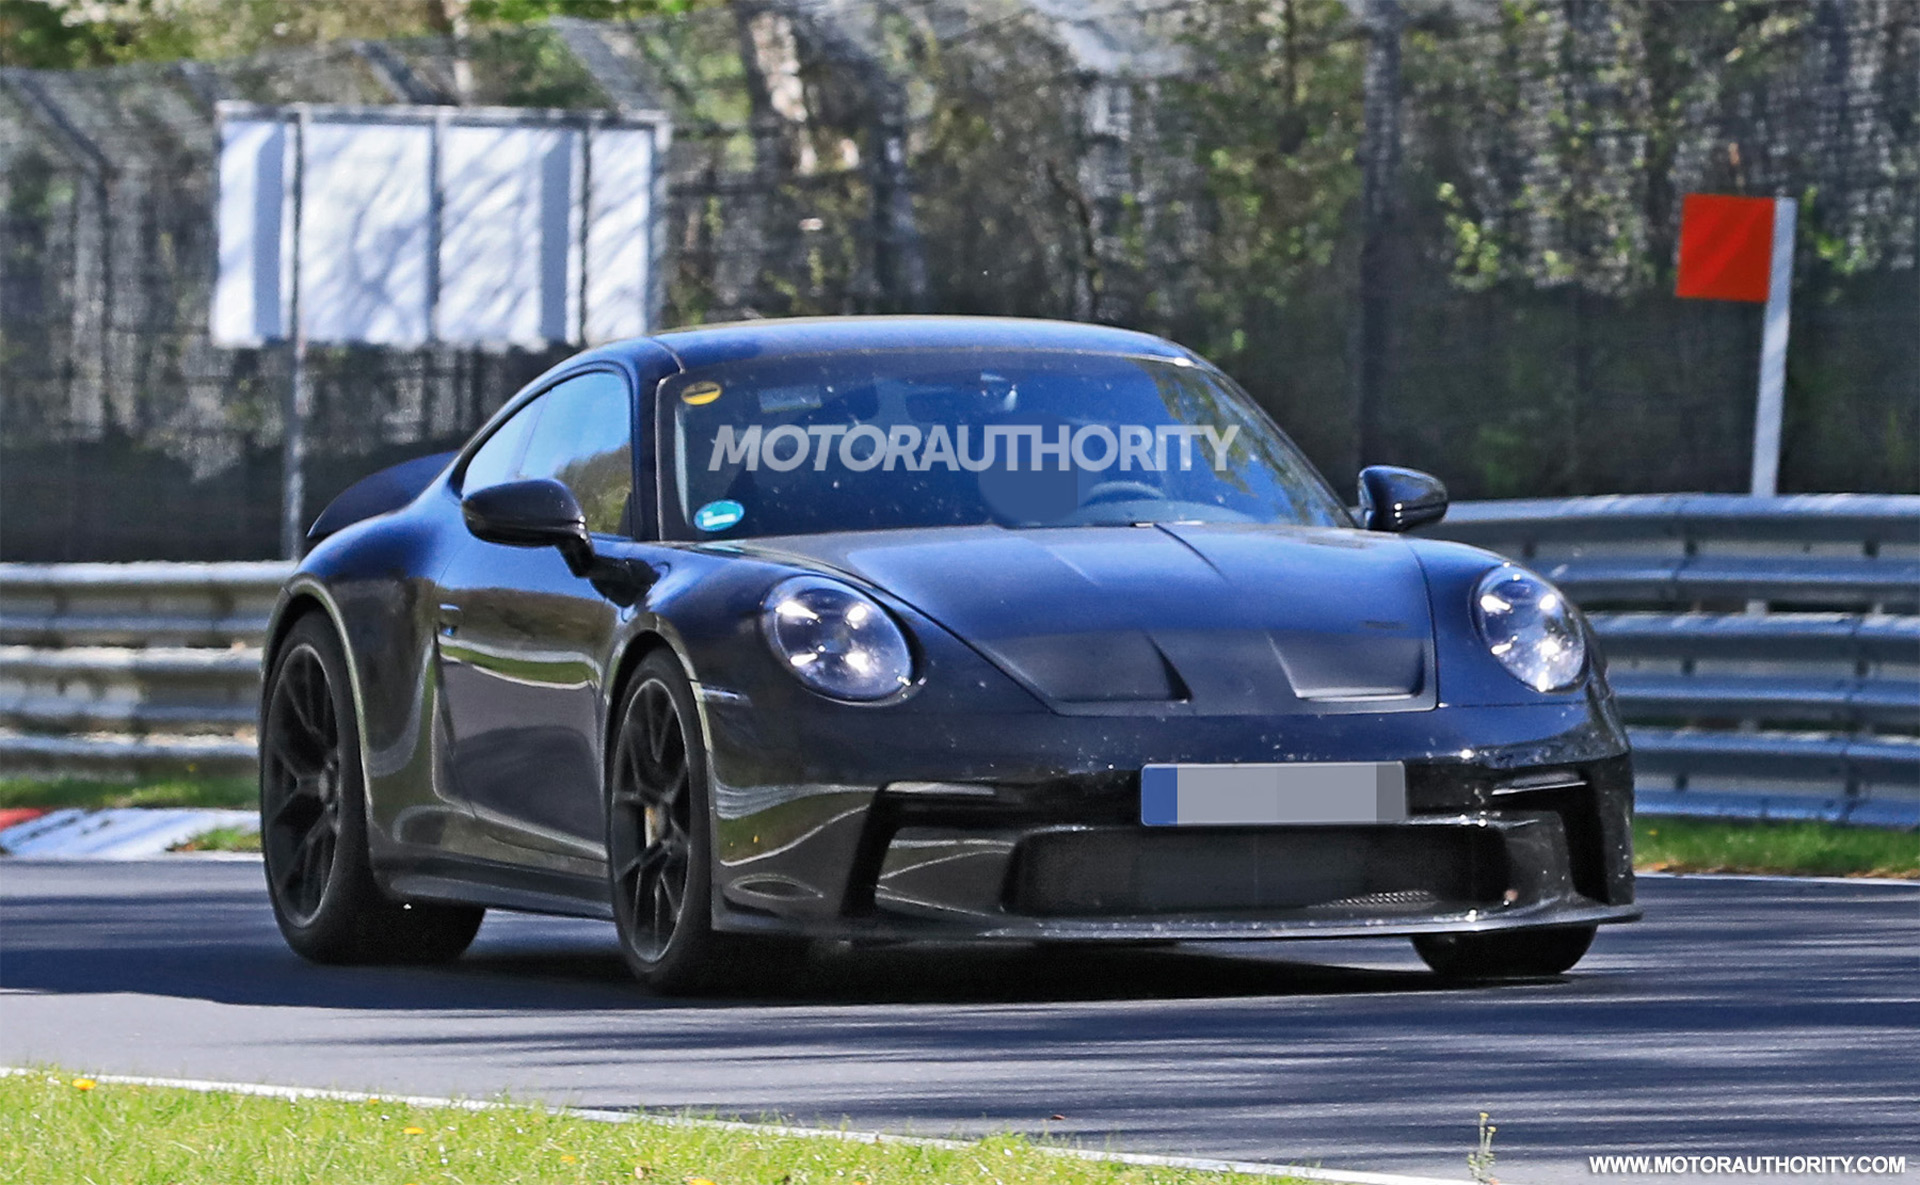 2021 Porsche 911 GT3 Touring spy shots and video